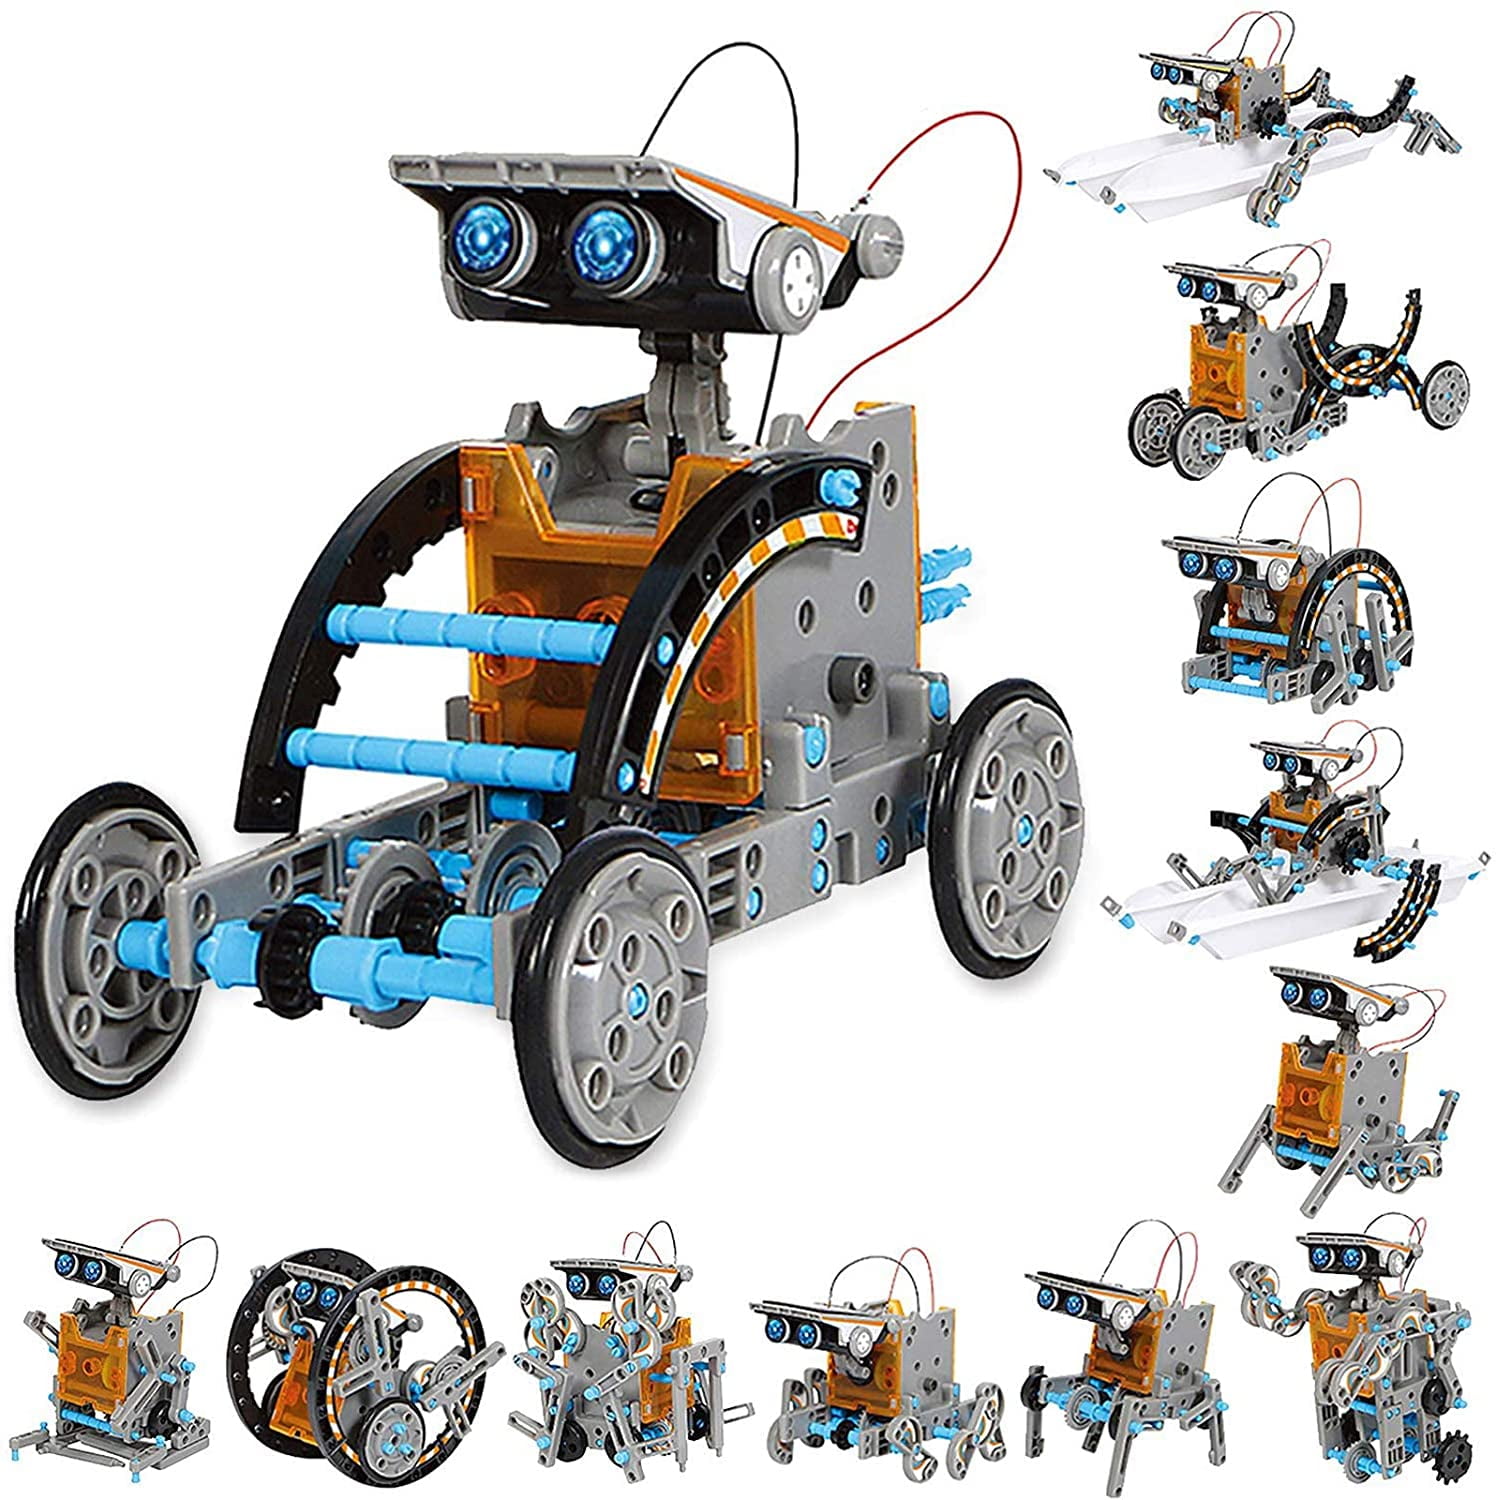 Solar Robot Kit 12-in-1 Science STEM Robot Kit Toys for Kids Educational DIY 